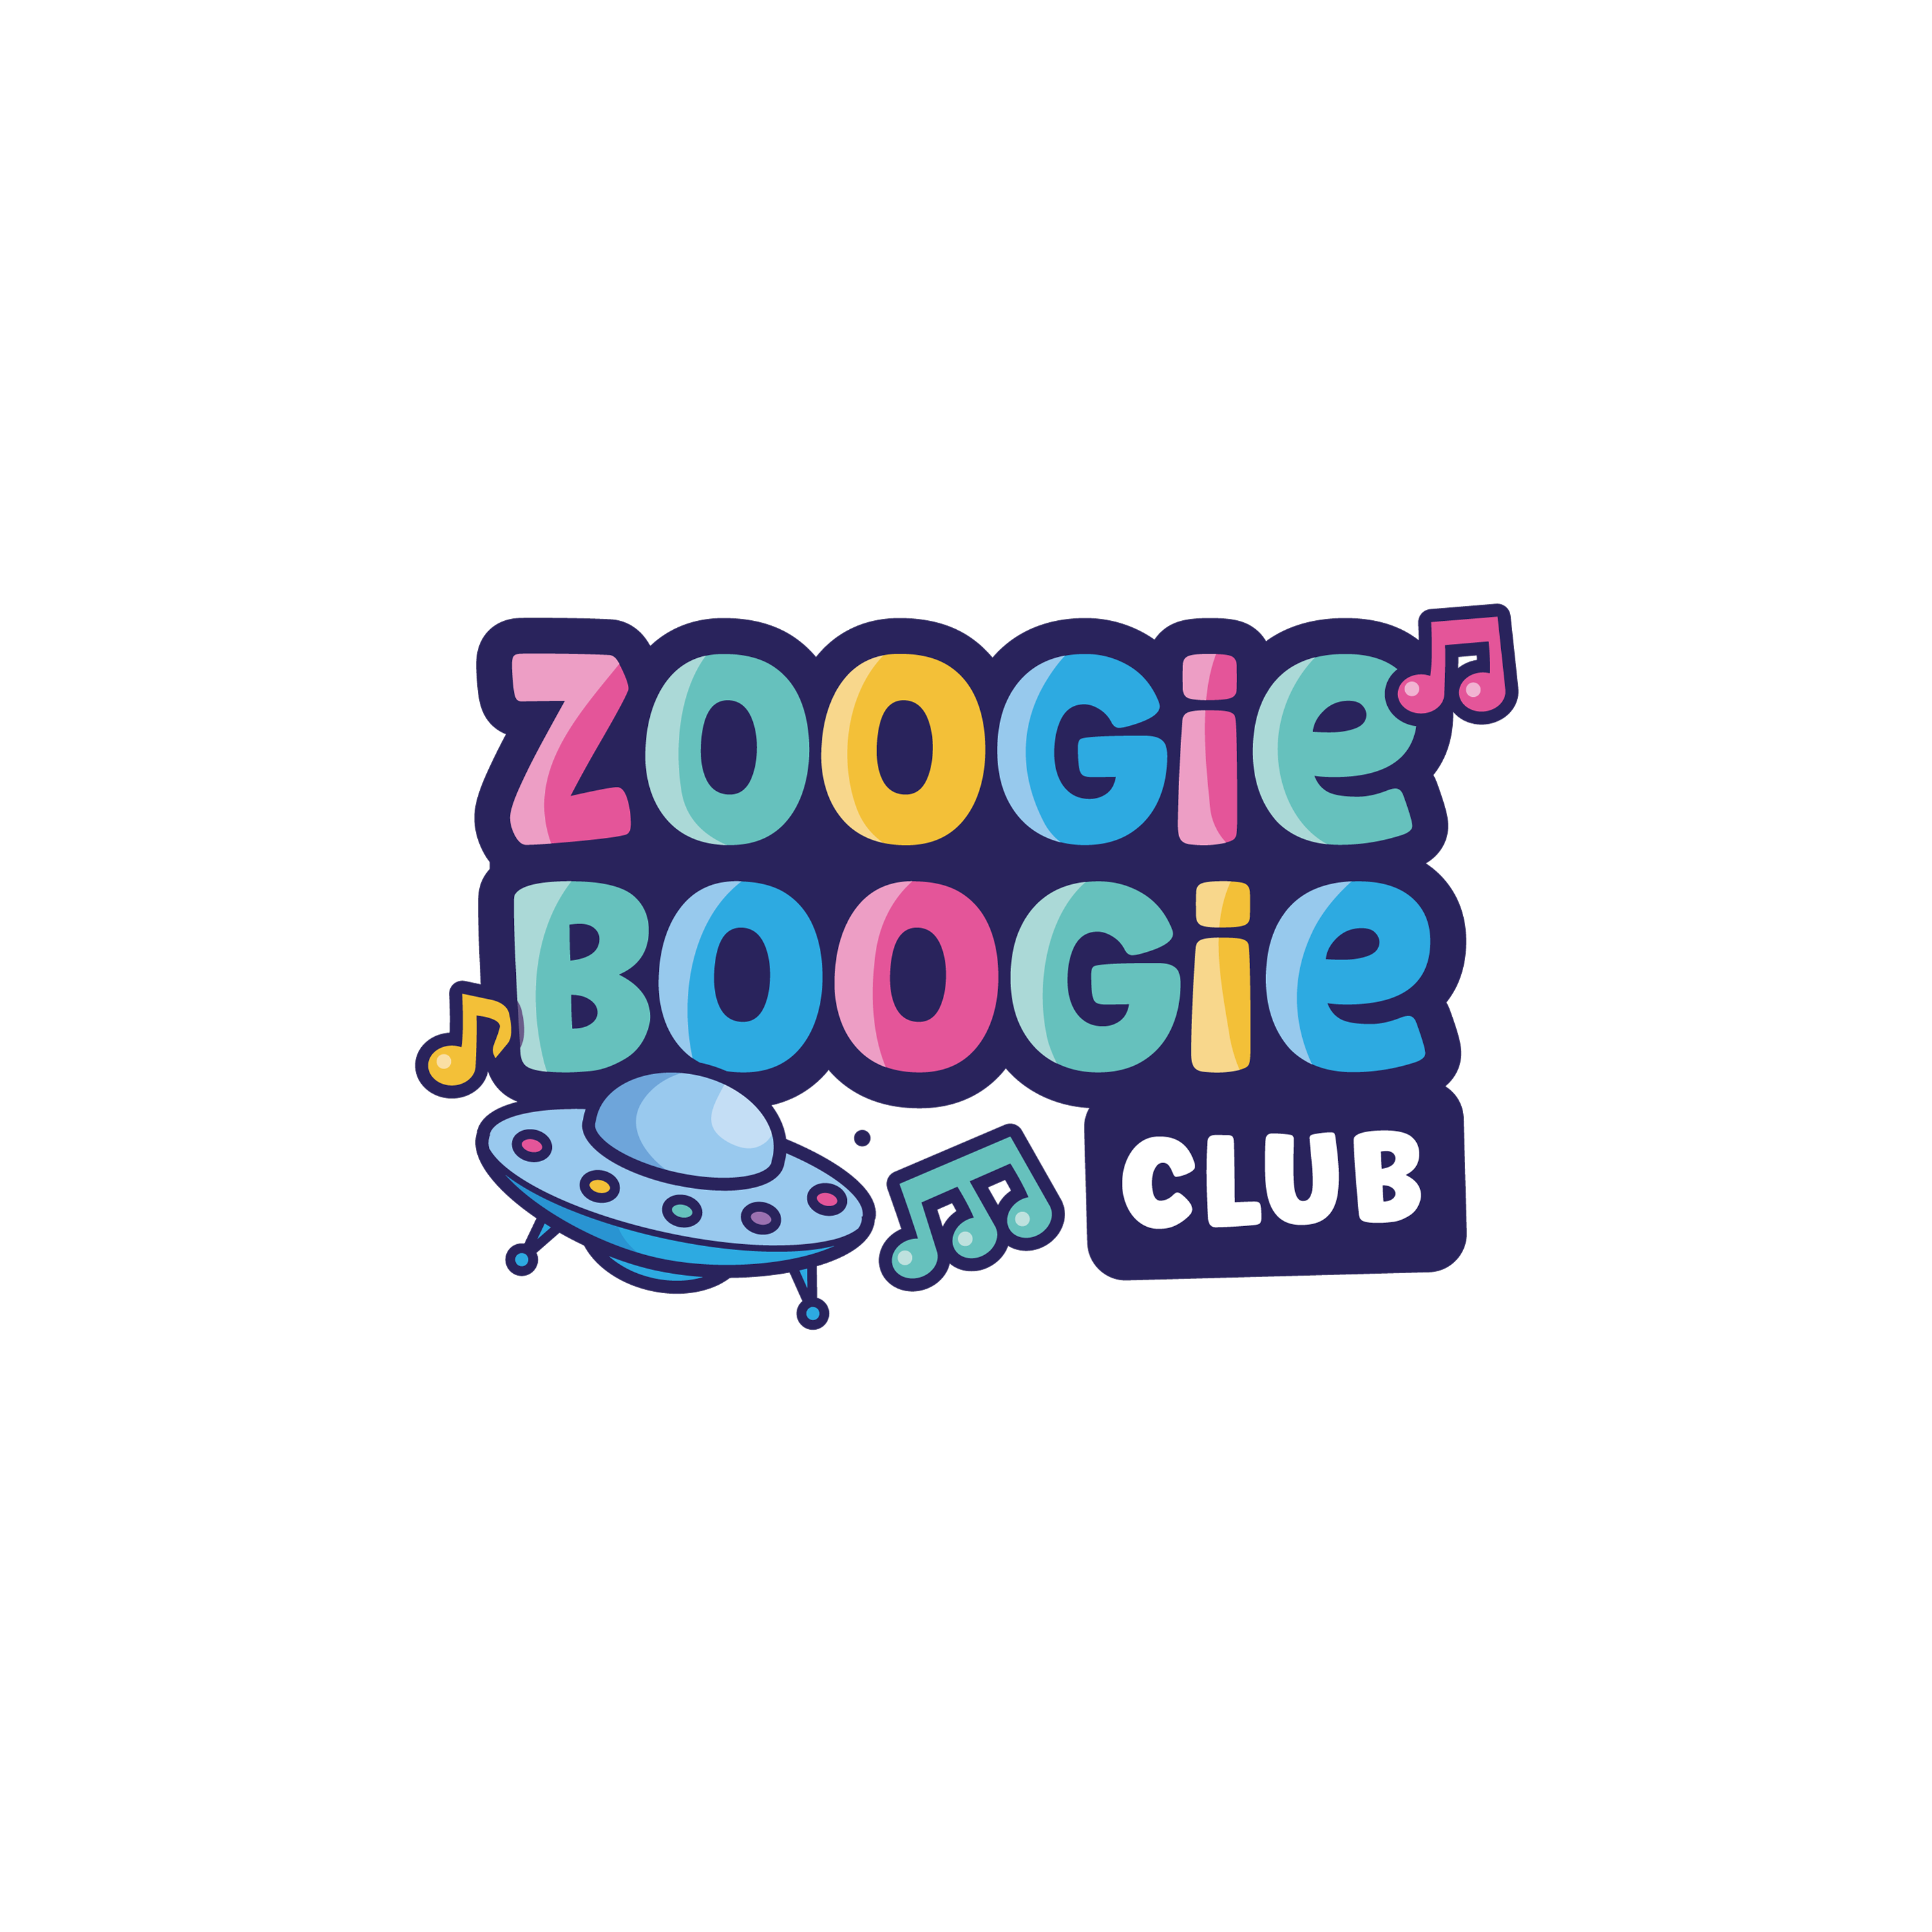 The Zoogie Boogie Club's logo